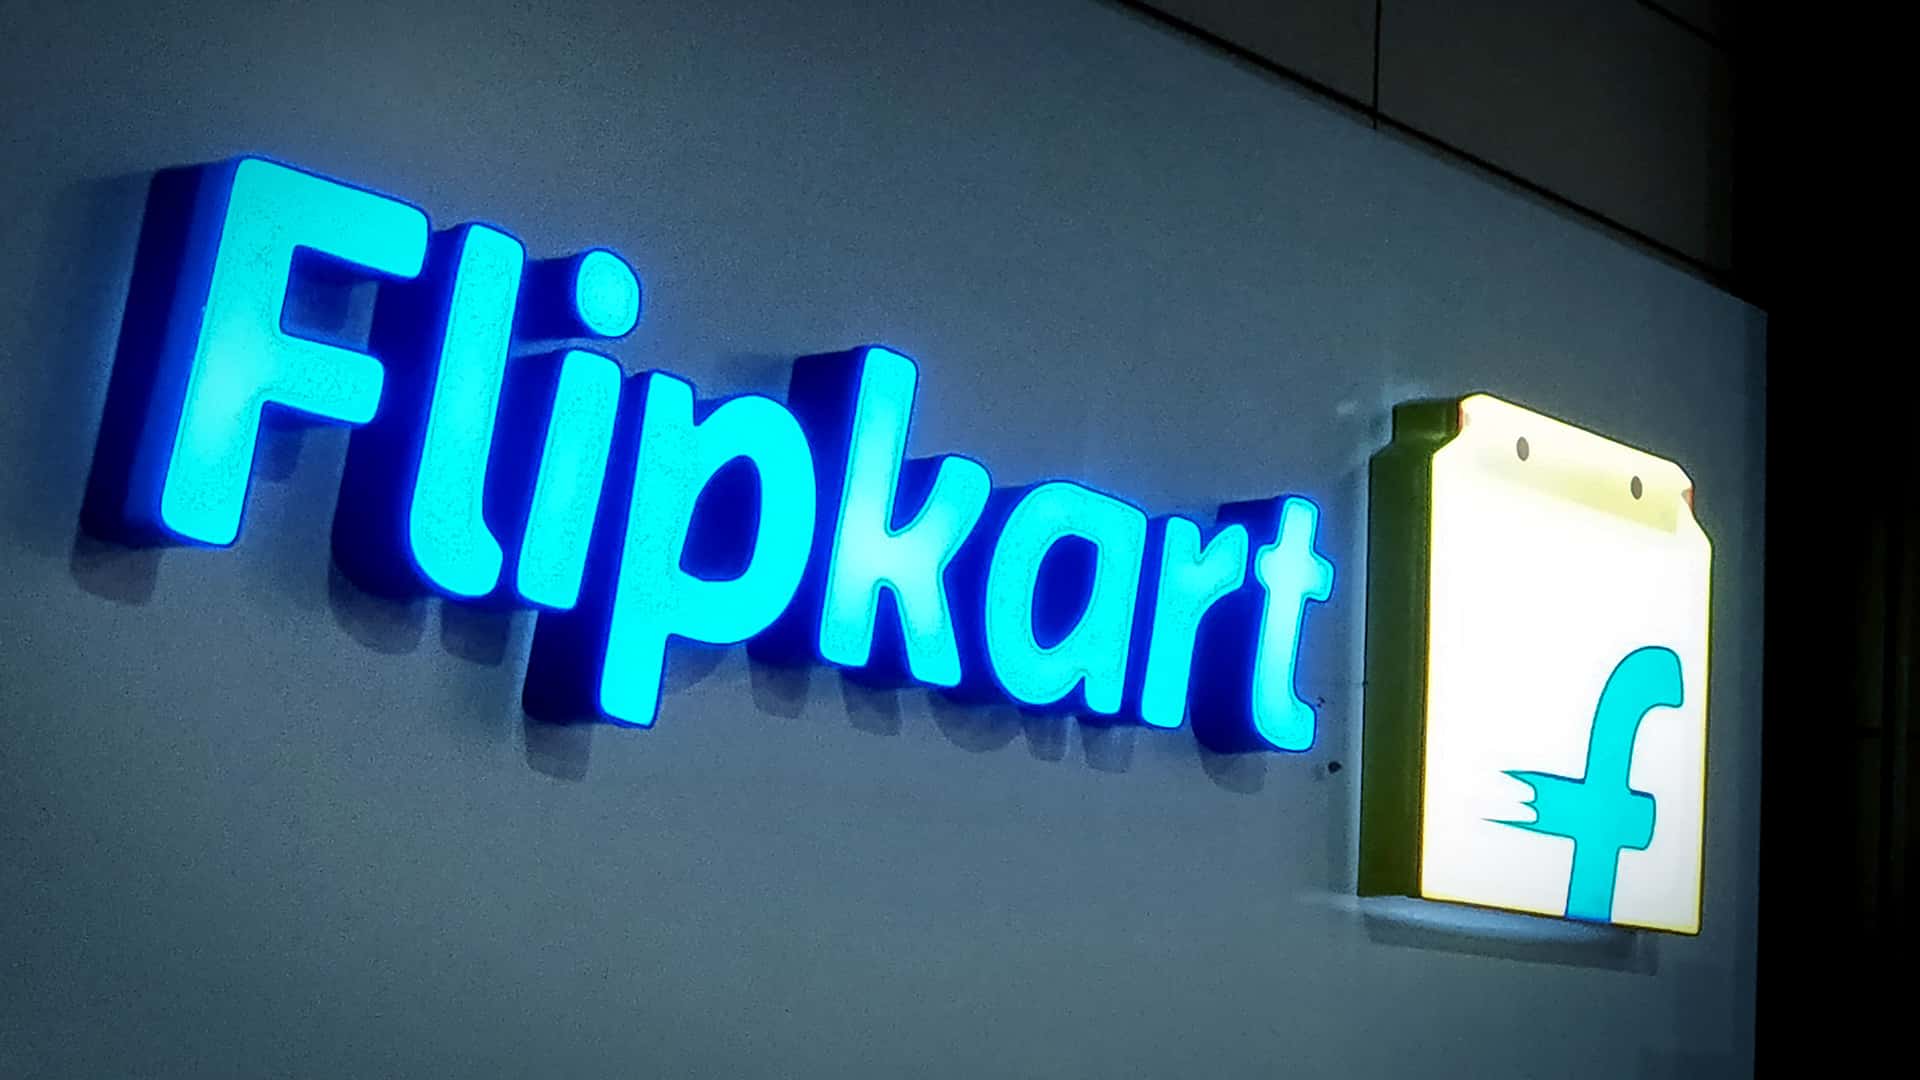 Flipkart Announces Its Big Saving Days Sale: Exciting Offers on Smartphones, Electronics & Appliances